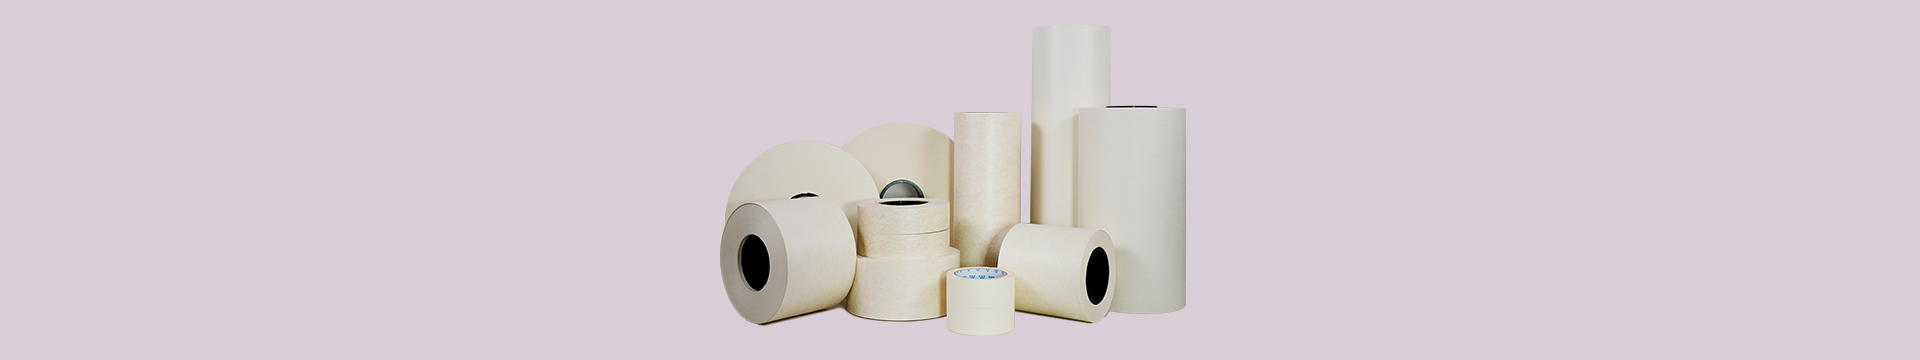 aramid paper insulation factory, aramid paper insulation manufacturer, aramid paper insulation supplier